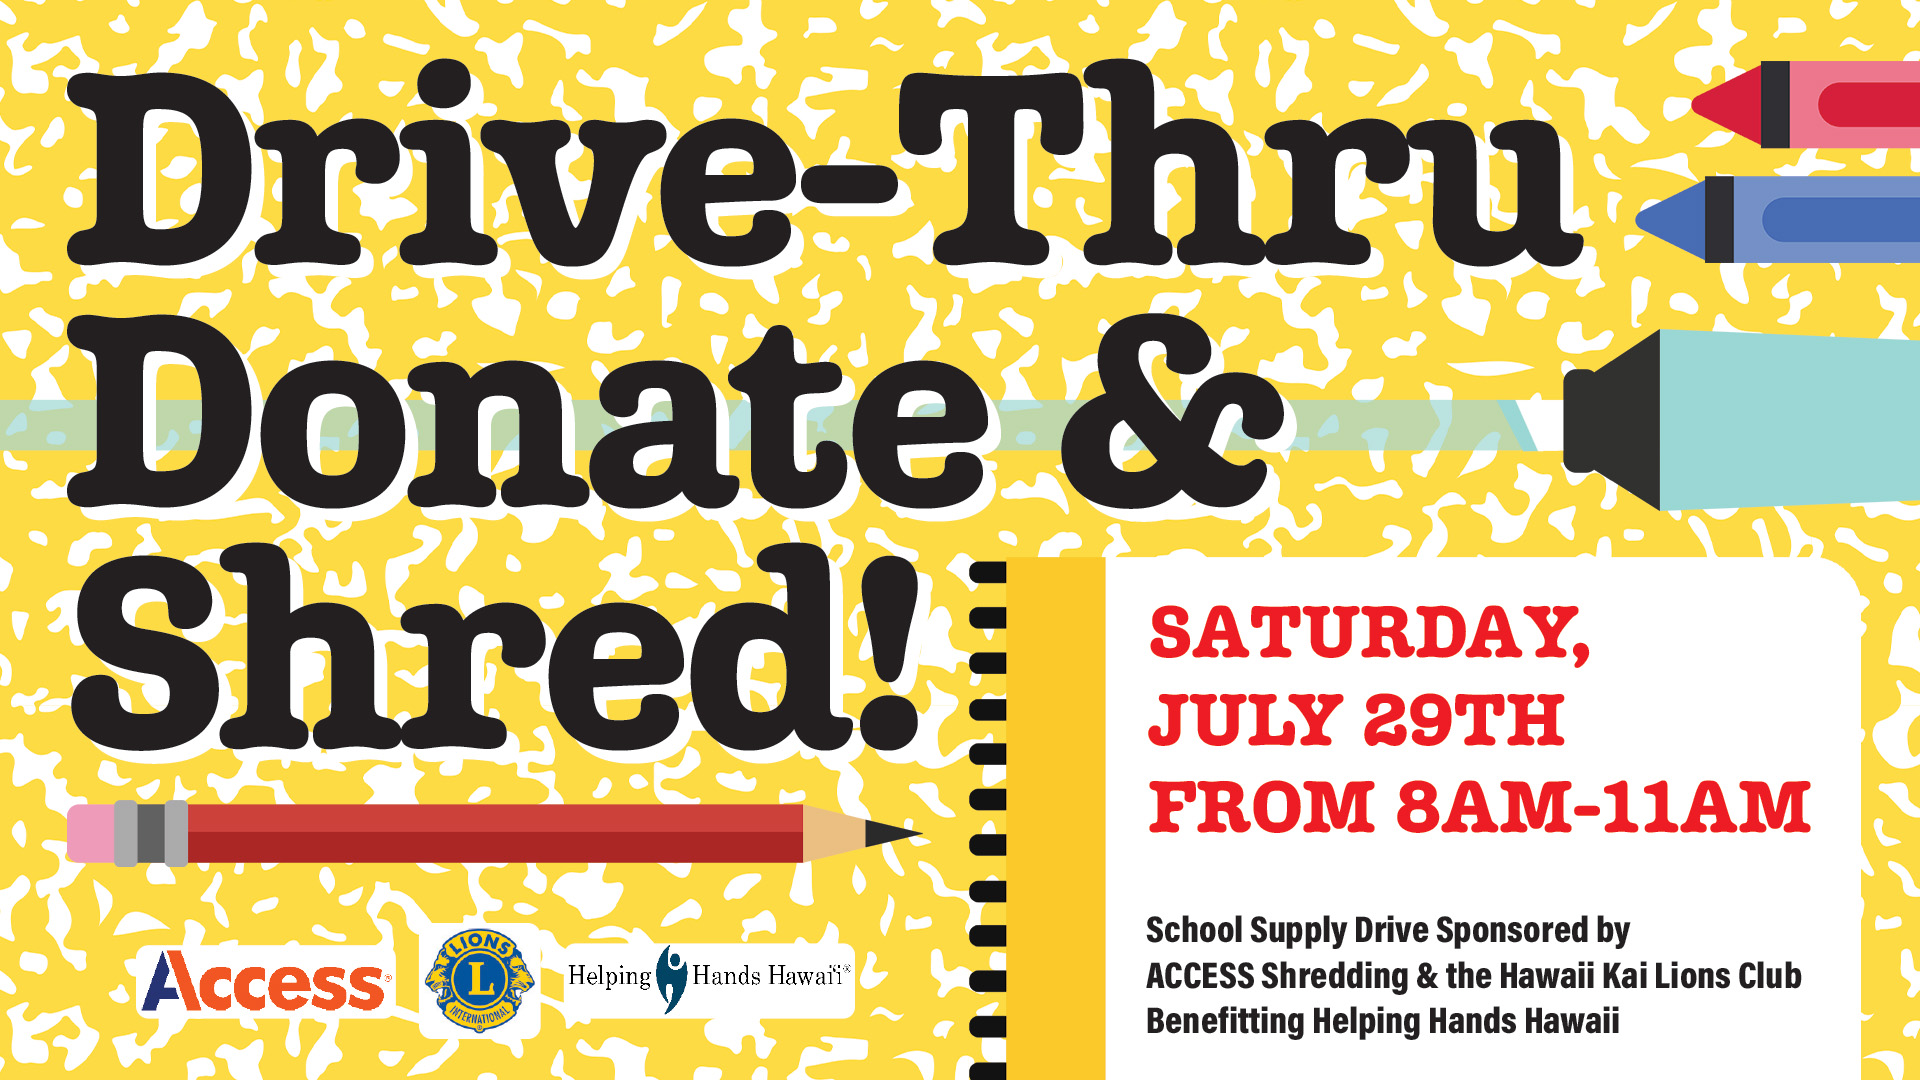 DRIVE-THRU, DONATE and SHRED! event at Koko Marina Center!